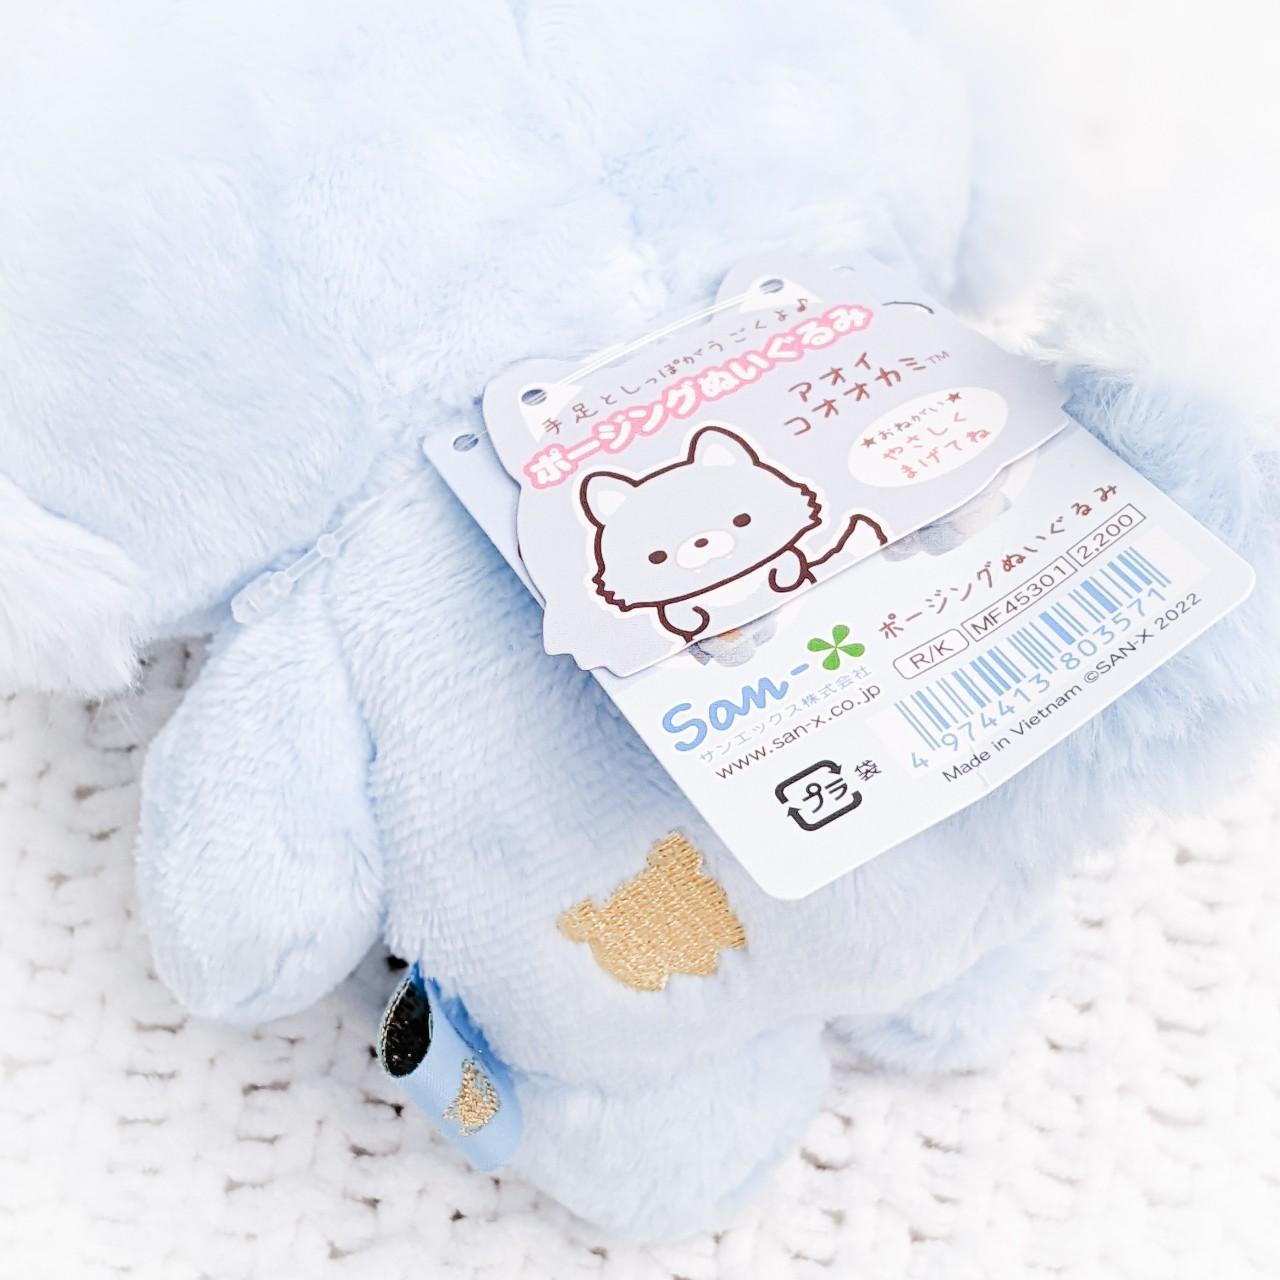 Posing Aoioookami Stuffed Plush Toy Rilakkuma Poseable Bear San-x 2022